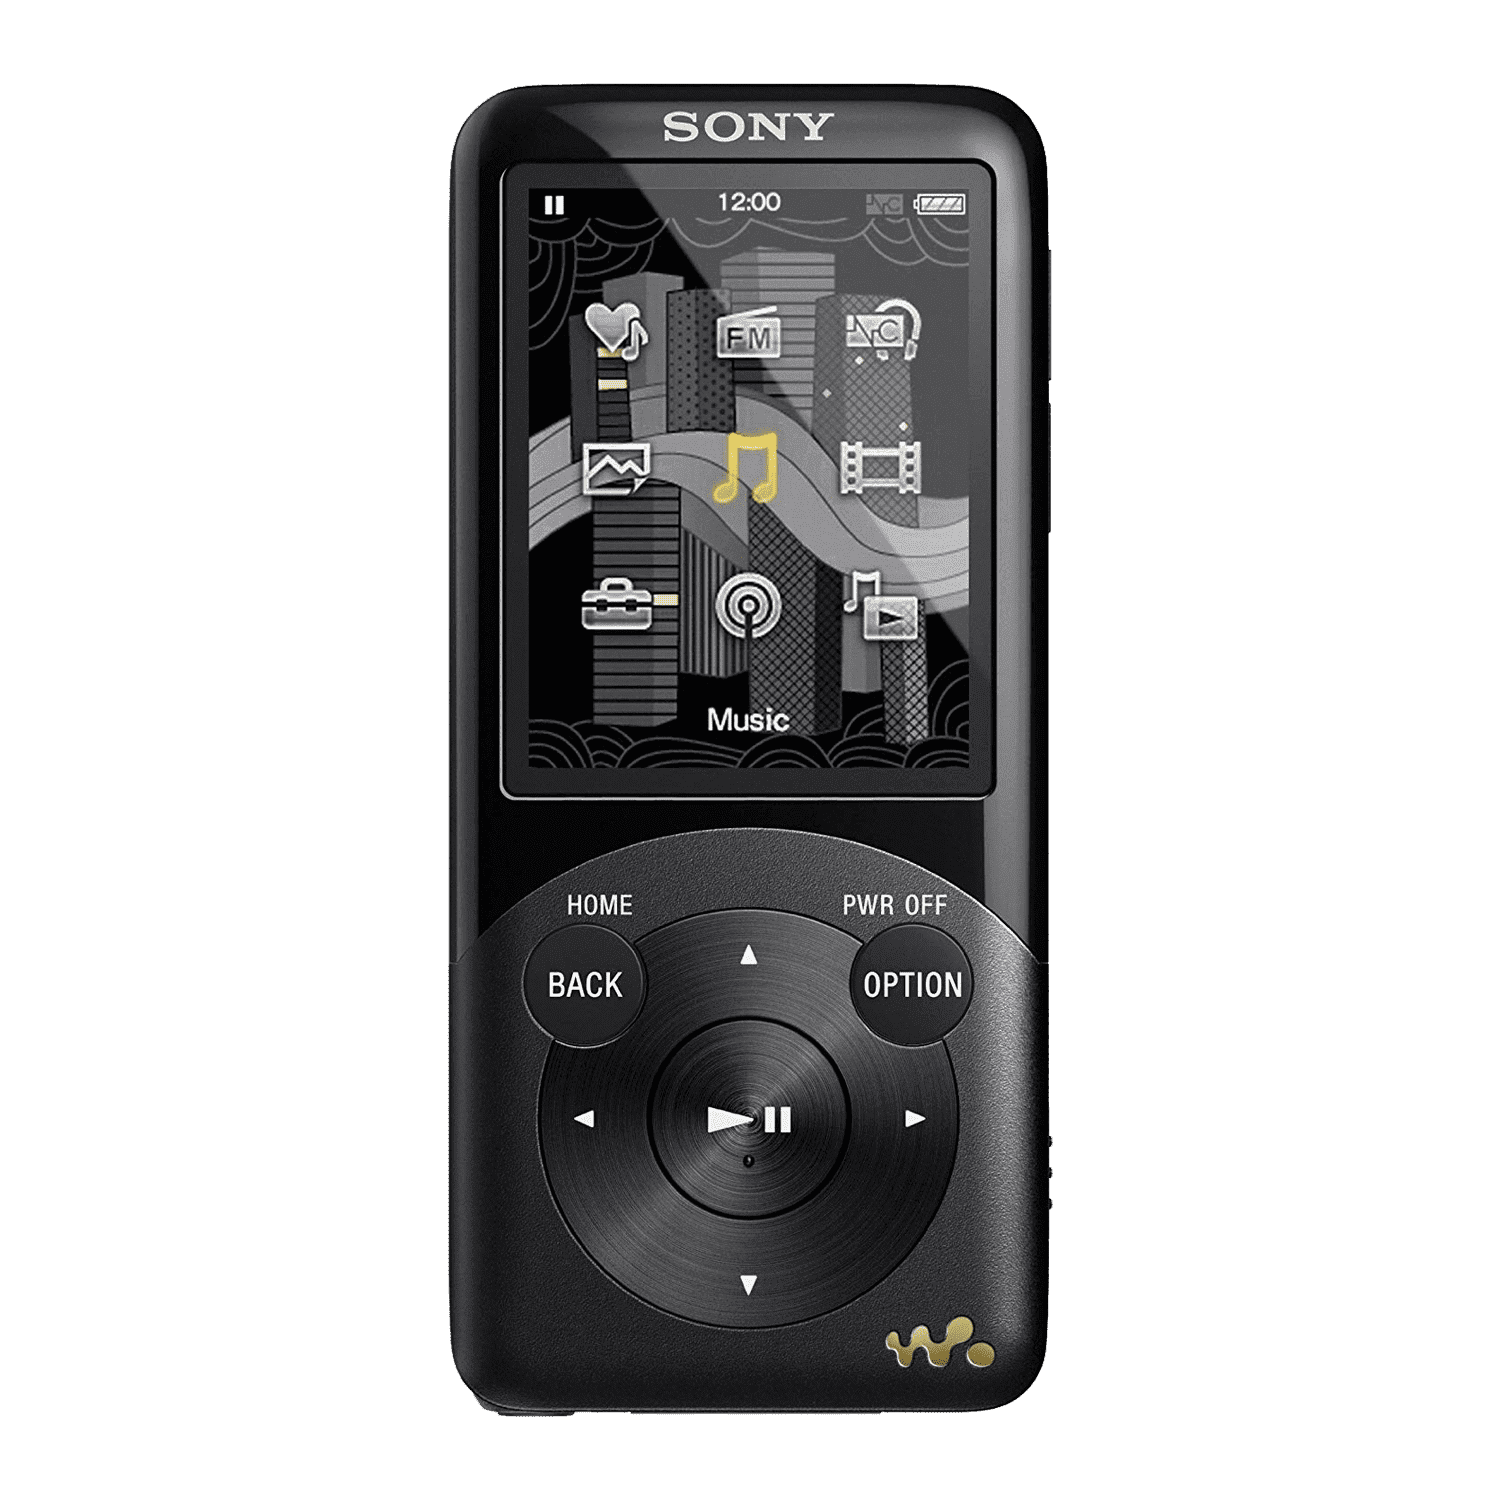 Sony NWZ-E344 8GB E Series Walkman Video MP3 Player (Black)